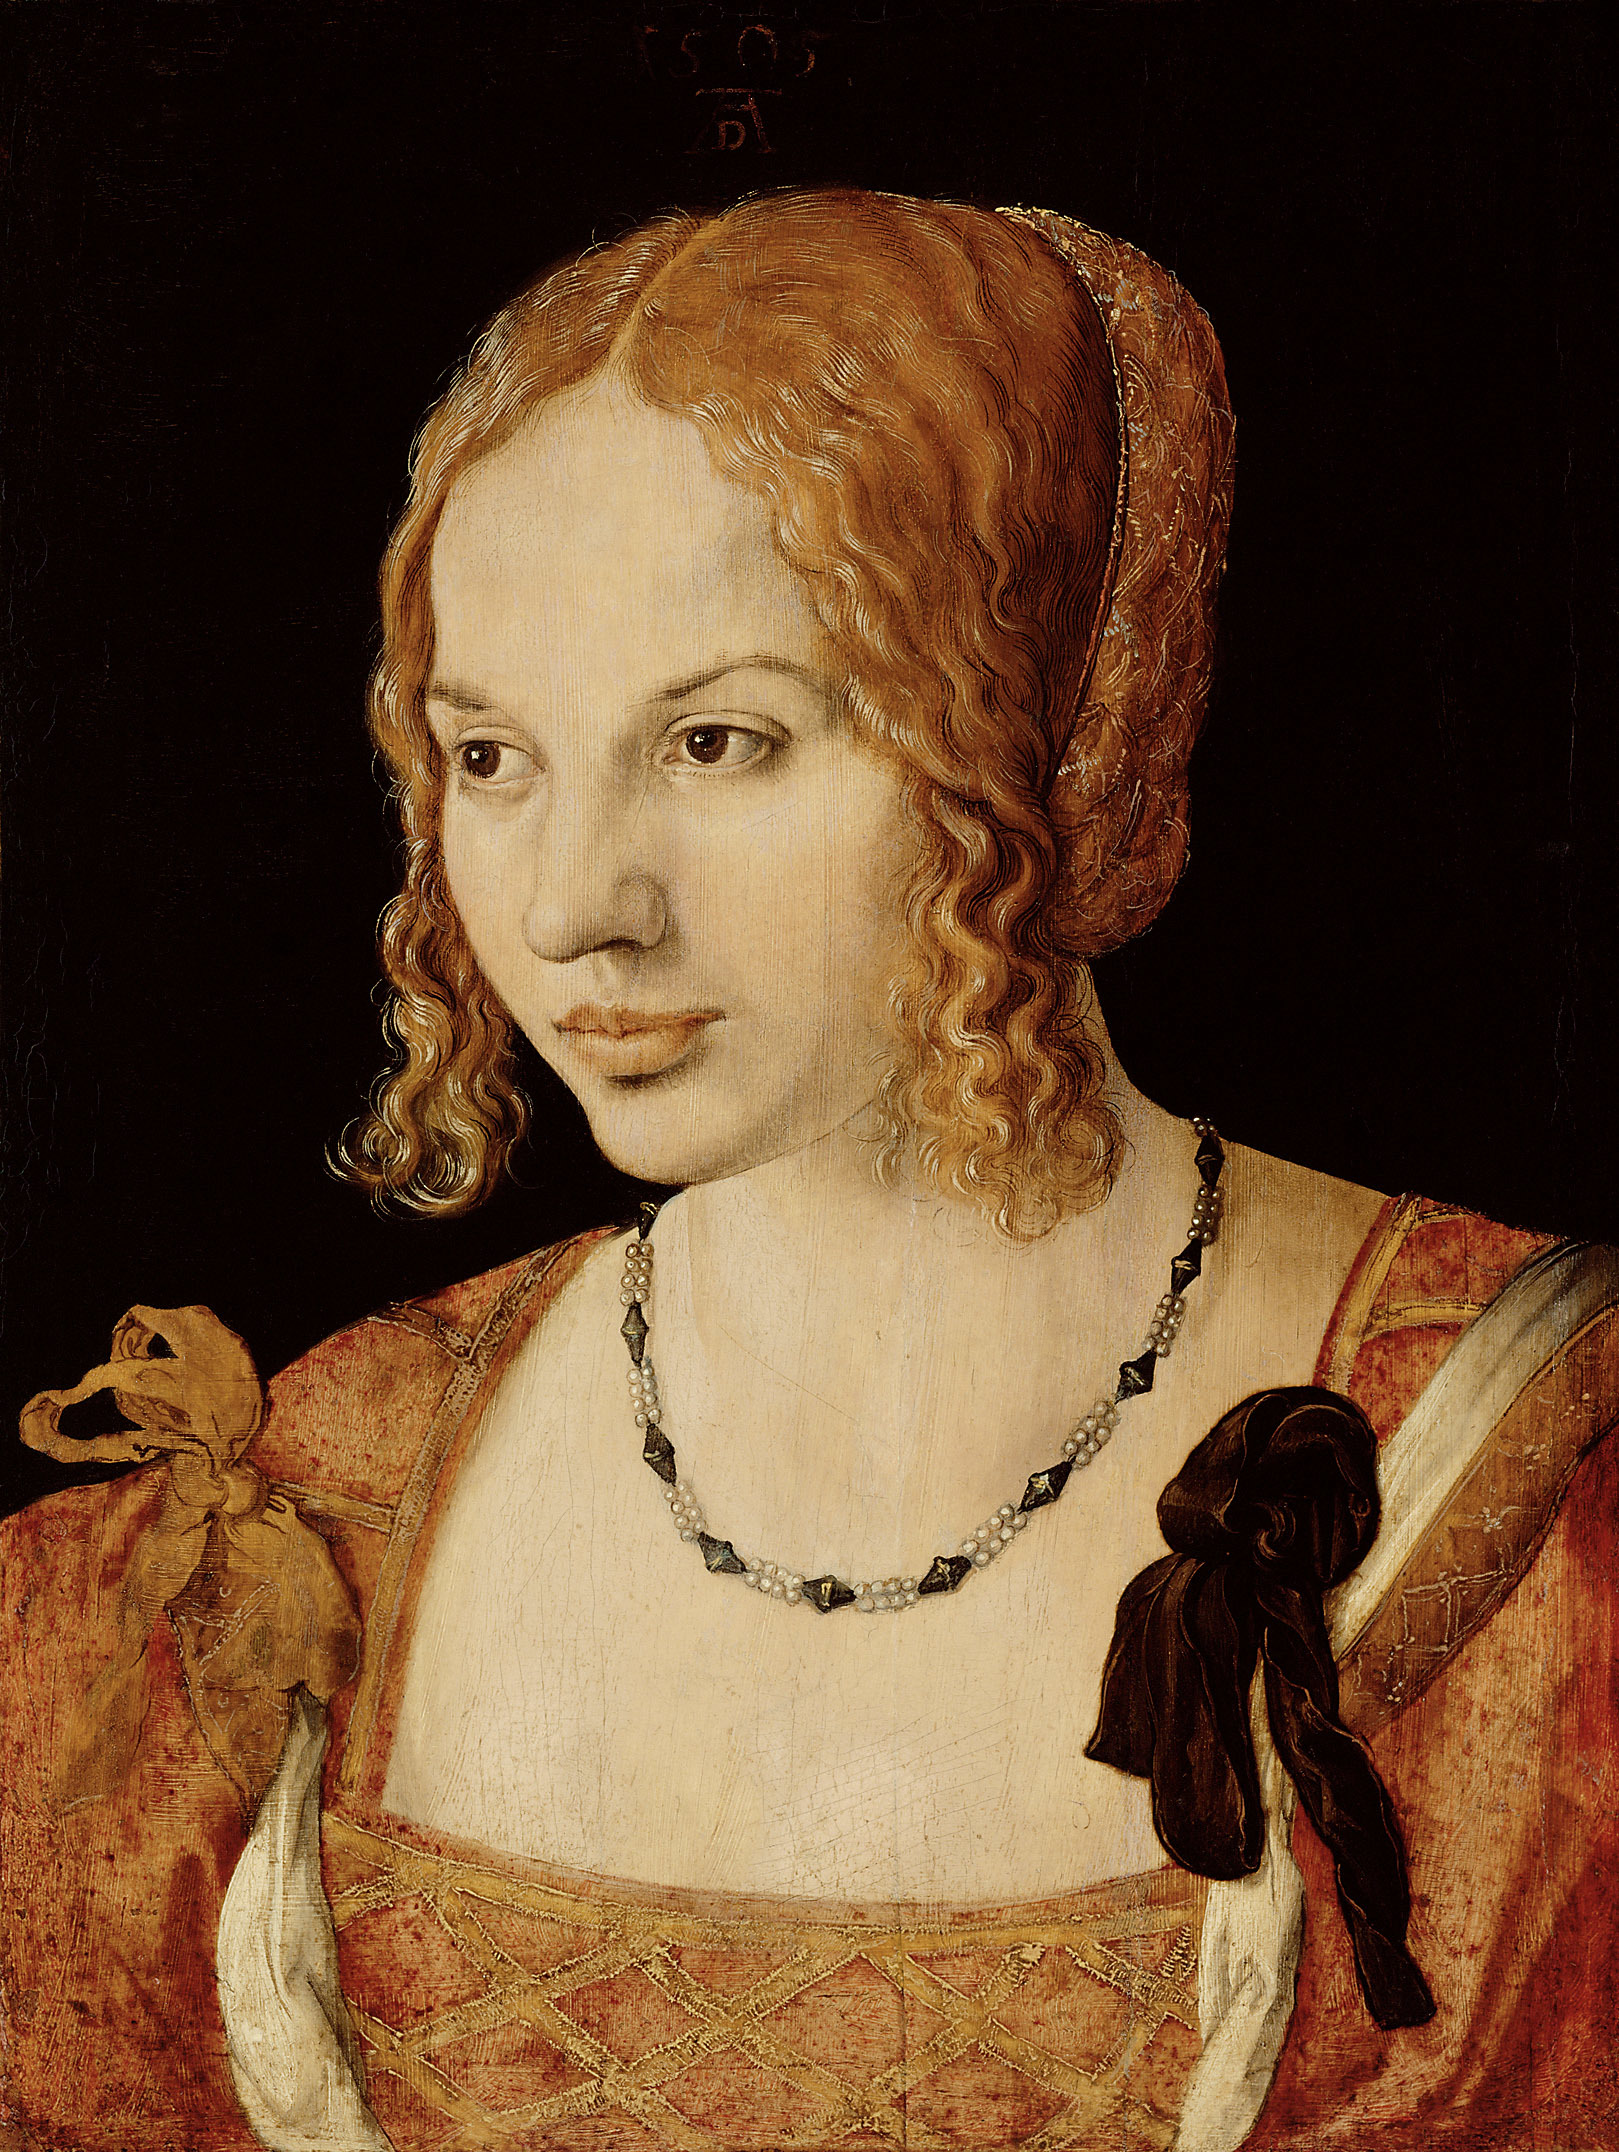 Portrait d’une Jeune Femme Vénitienne by Albrecht Dürer - 1505 Kunsthistorisches Museum